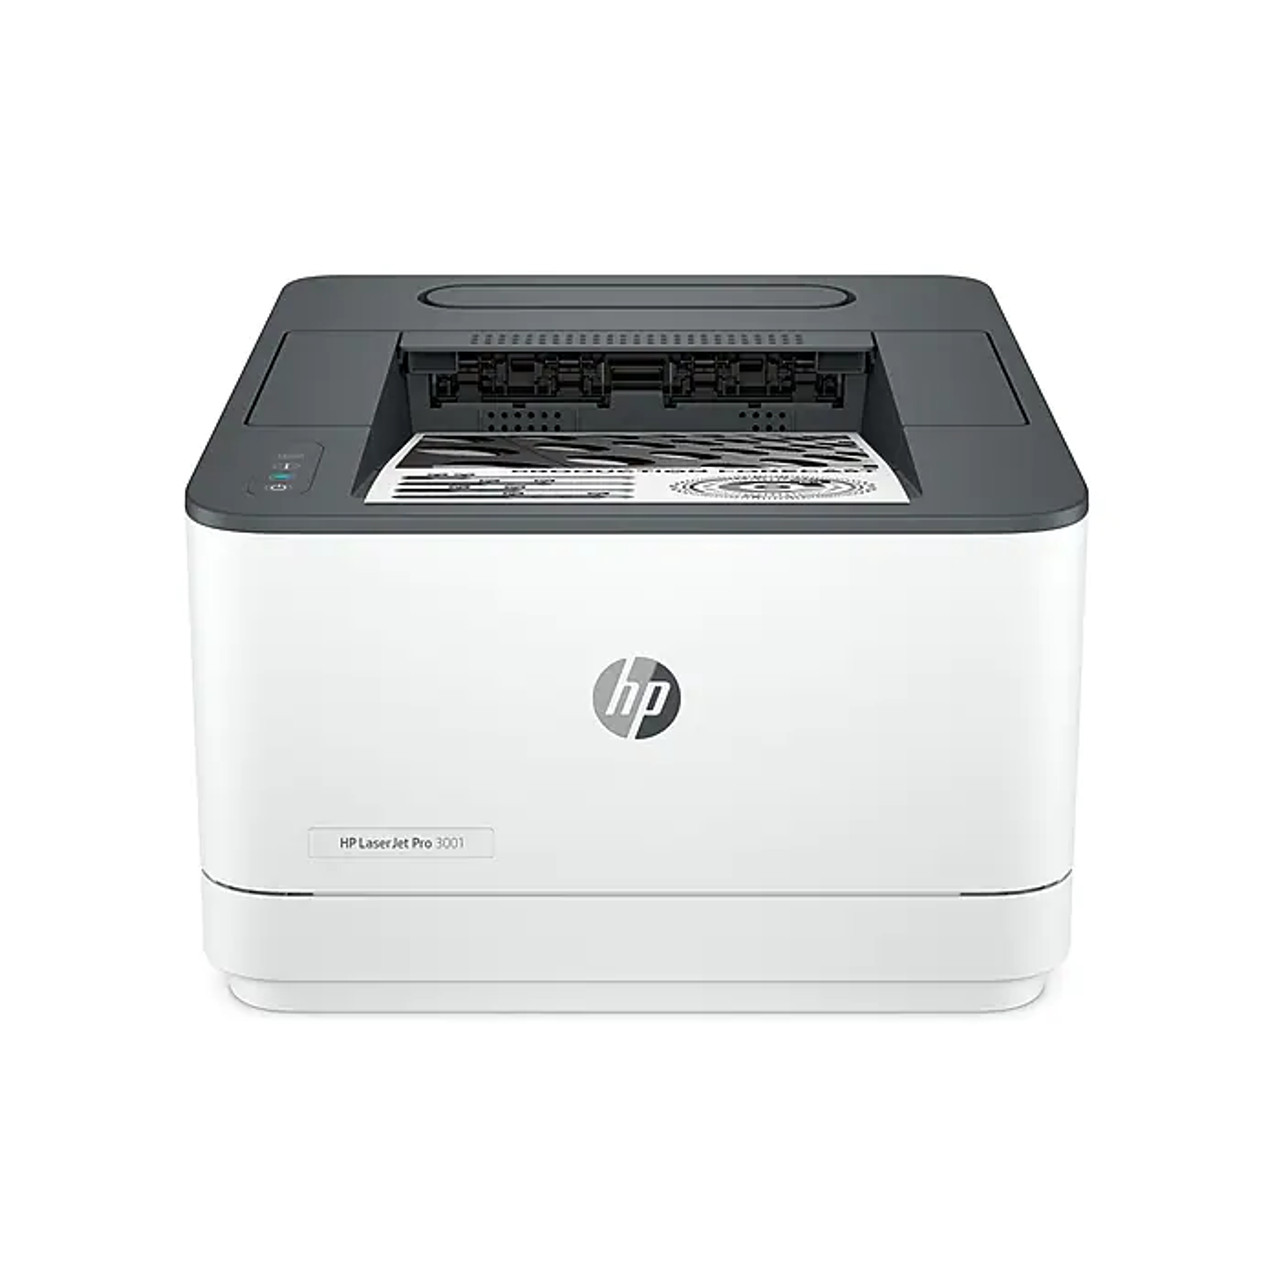 New!! HP LaserJet Pro 3001dw Laser Printer, Black And White Mobile Print Up to 50,000